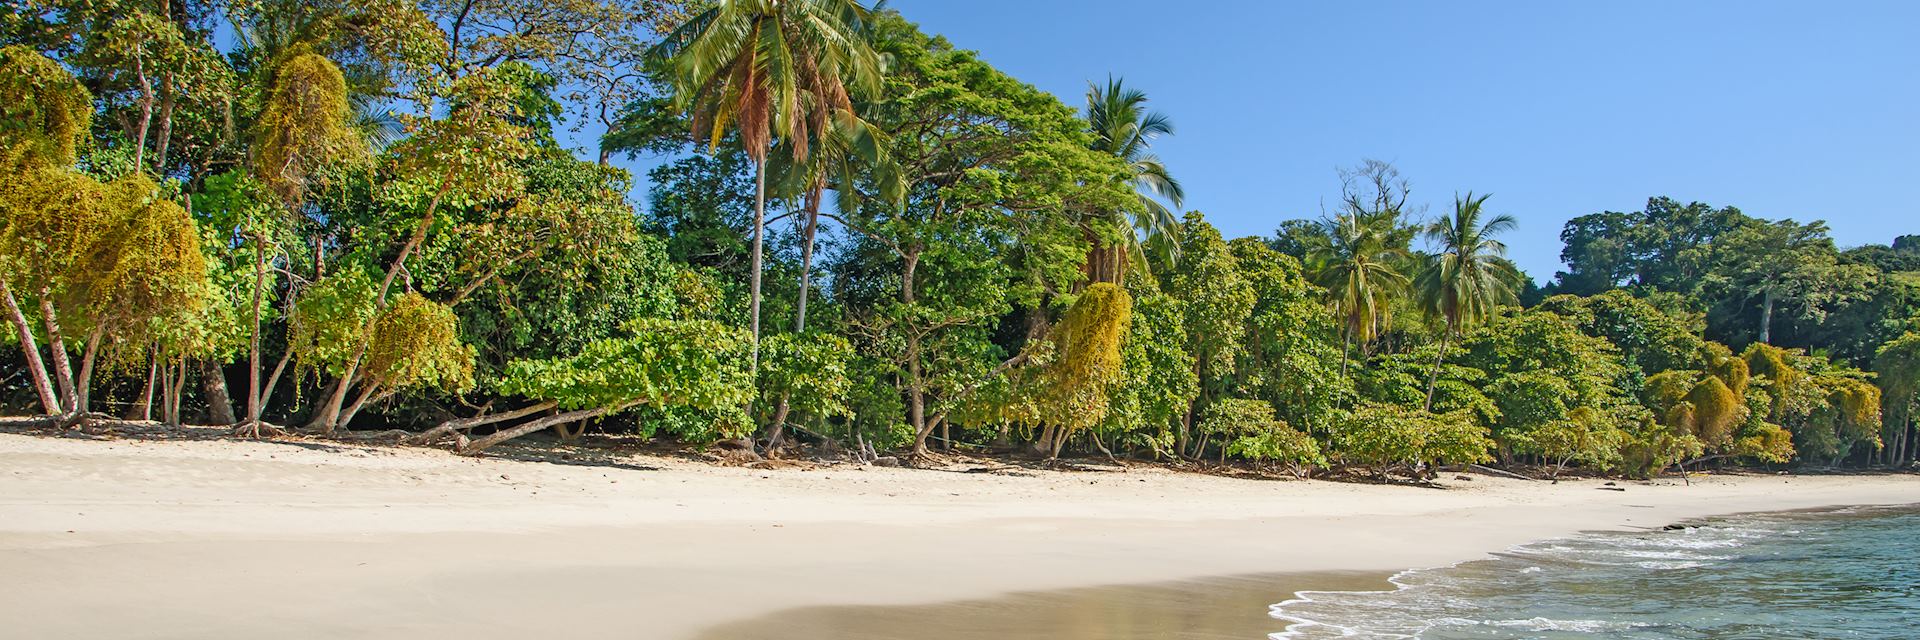 Beach in Manuel Antonio National Park